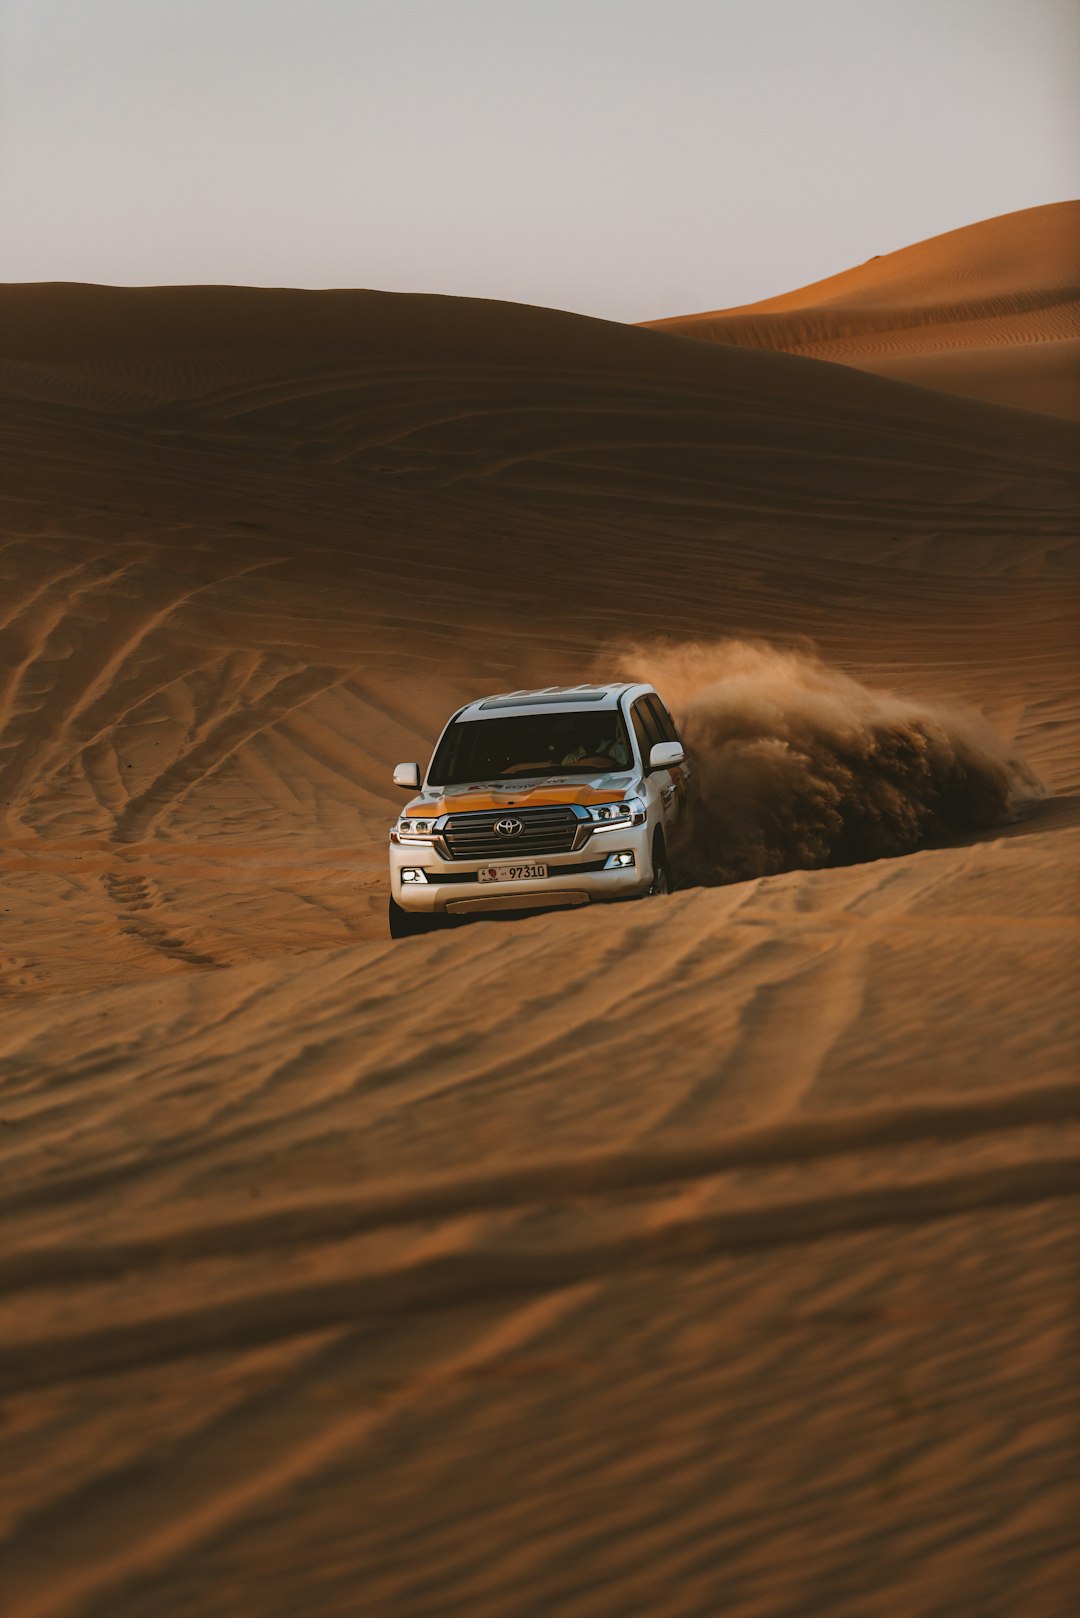 Desert racing photo spot Abu Dhabi United Arab Emirates